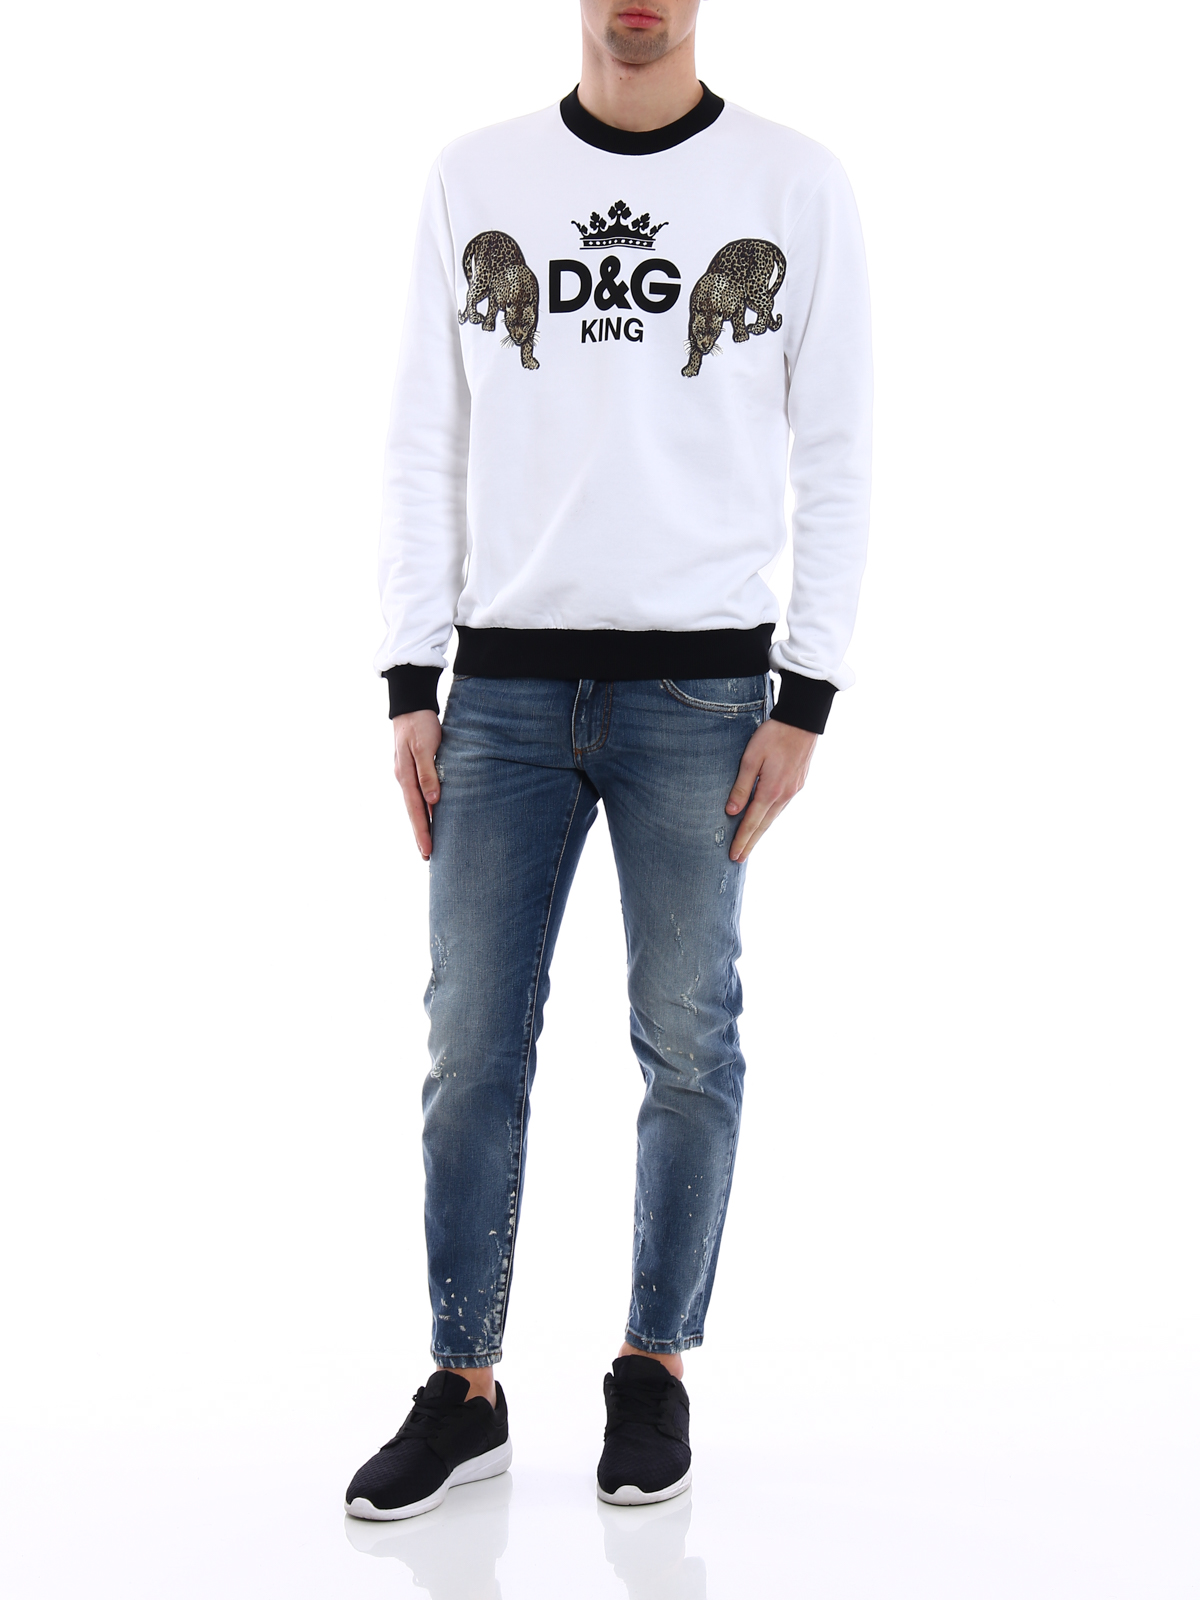 sharp Doctor Taiko belly Sweatshirts & Sweaters Dolce & Gabbana - D&G King print sweatshirt -  G9JQ2ZG7MOJHWI44